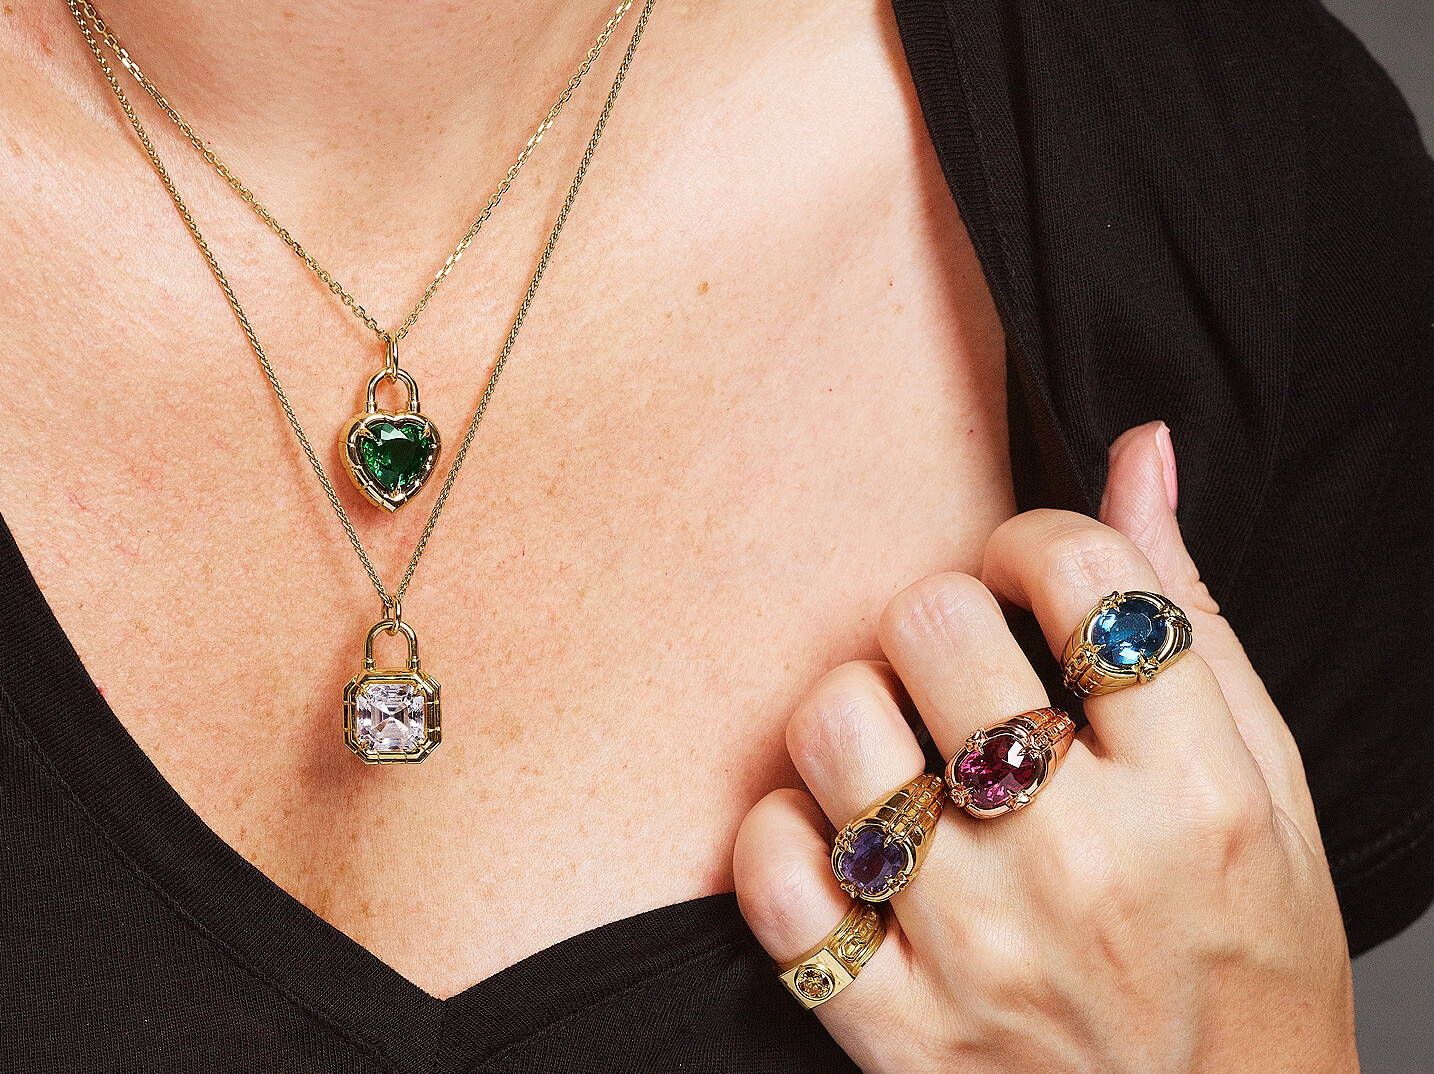 Jewelry styling - gemstones